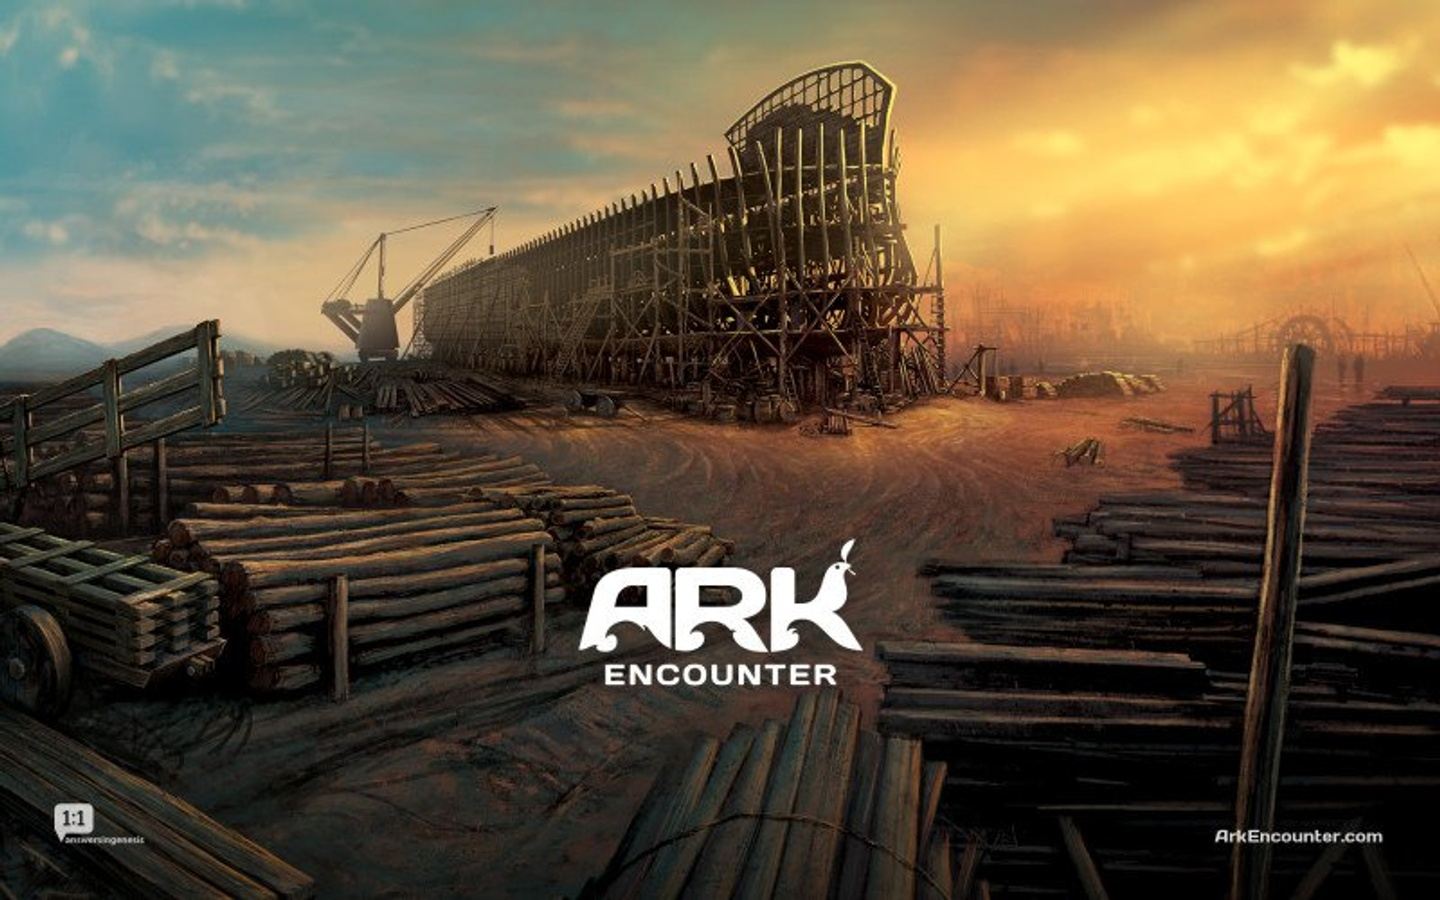 "The Ark Encounter & More"